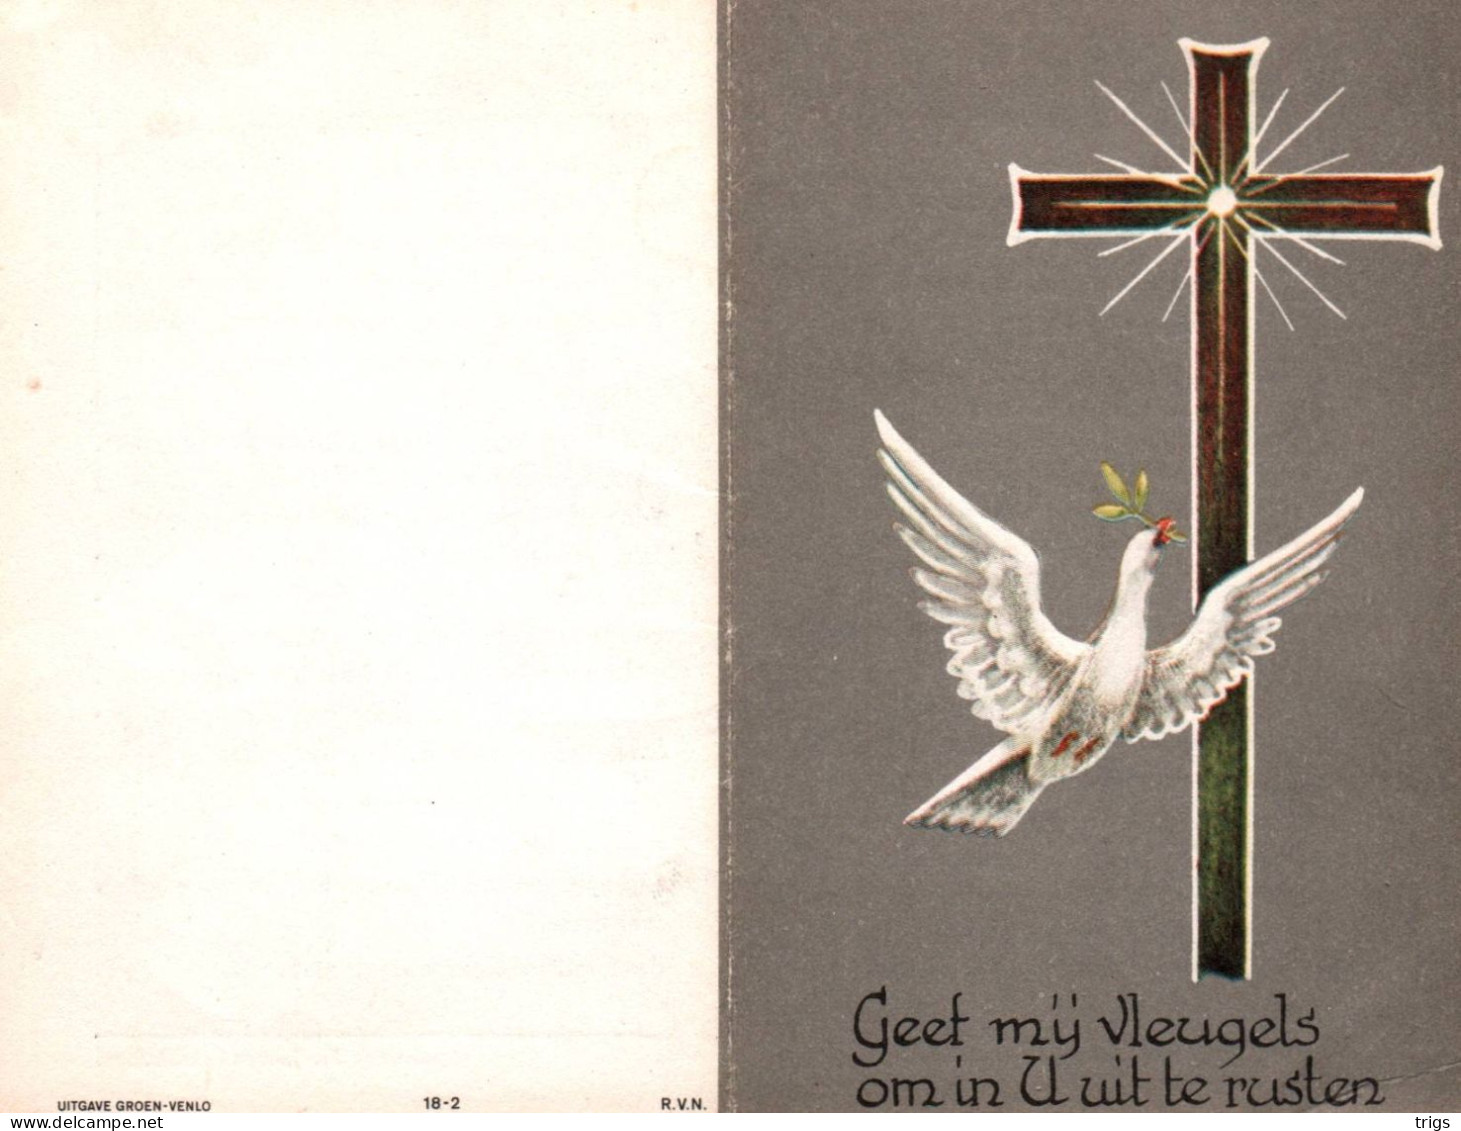 Franciscus Geerts (1891-1971) - Devotion Images